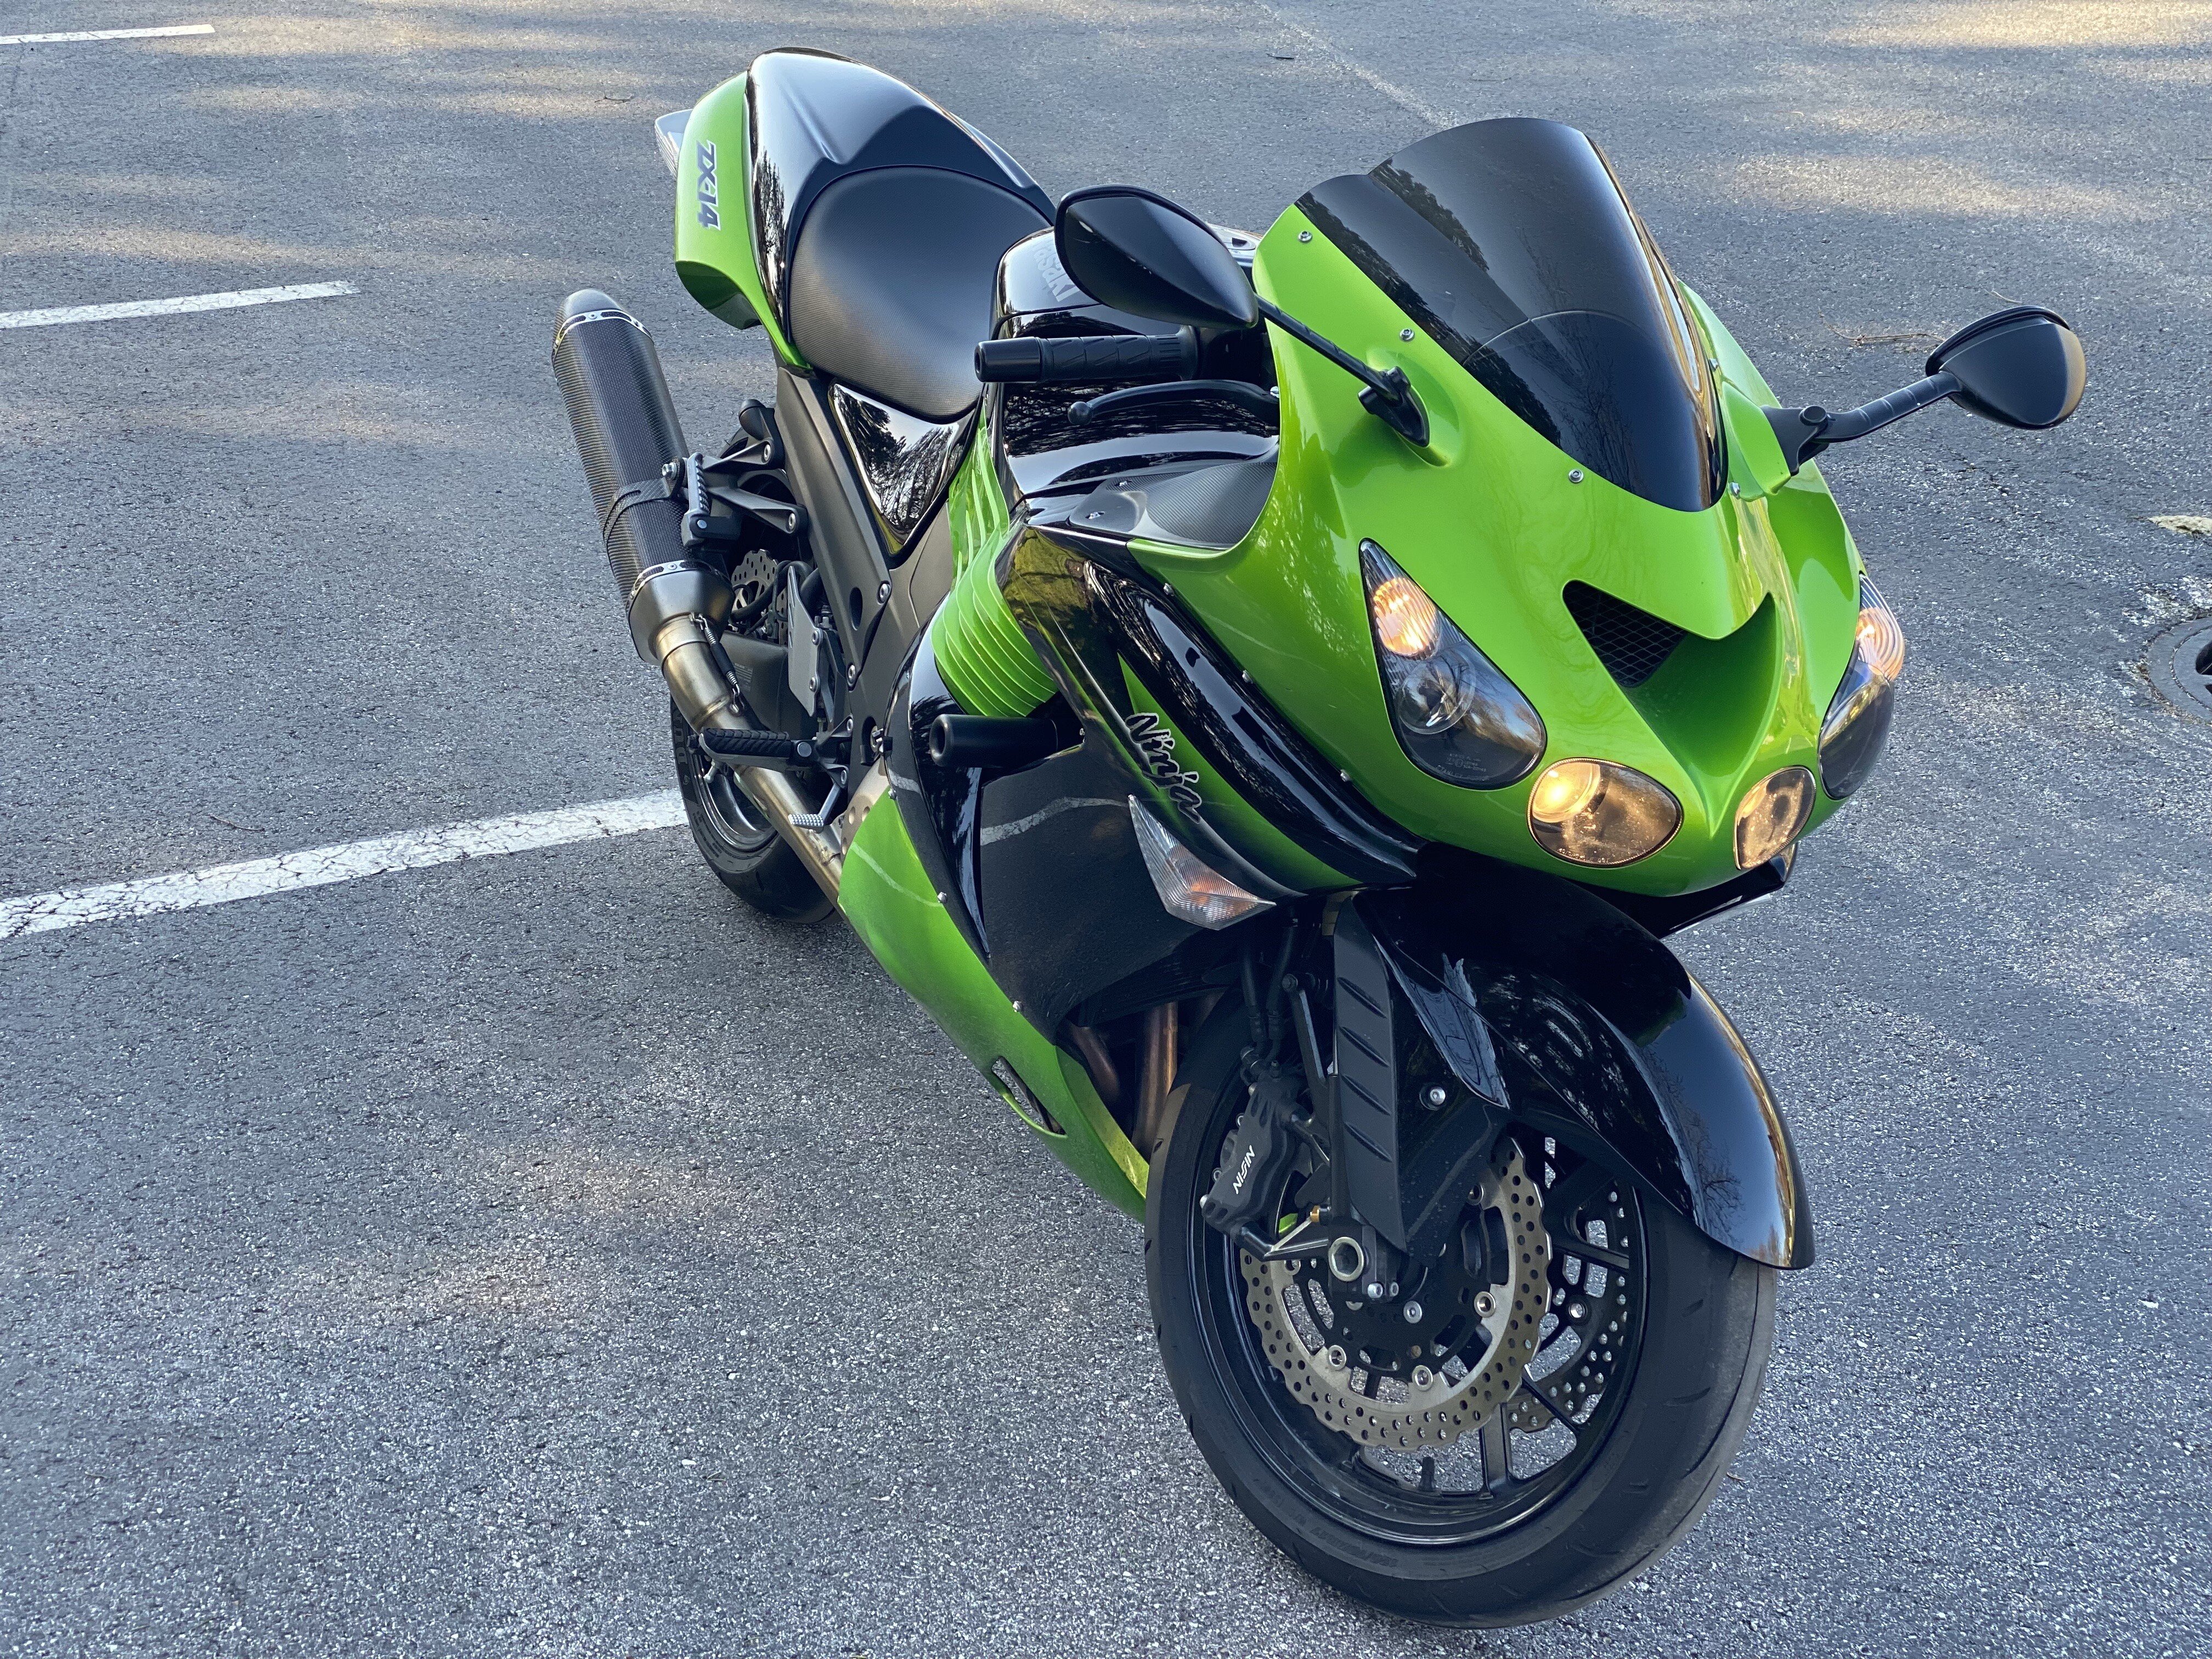 Kawasaki Ninja ZX-14 Motorcycles for Sale near Detroit, Michigan 